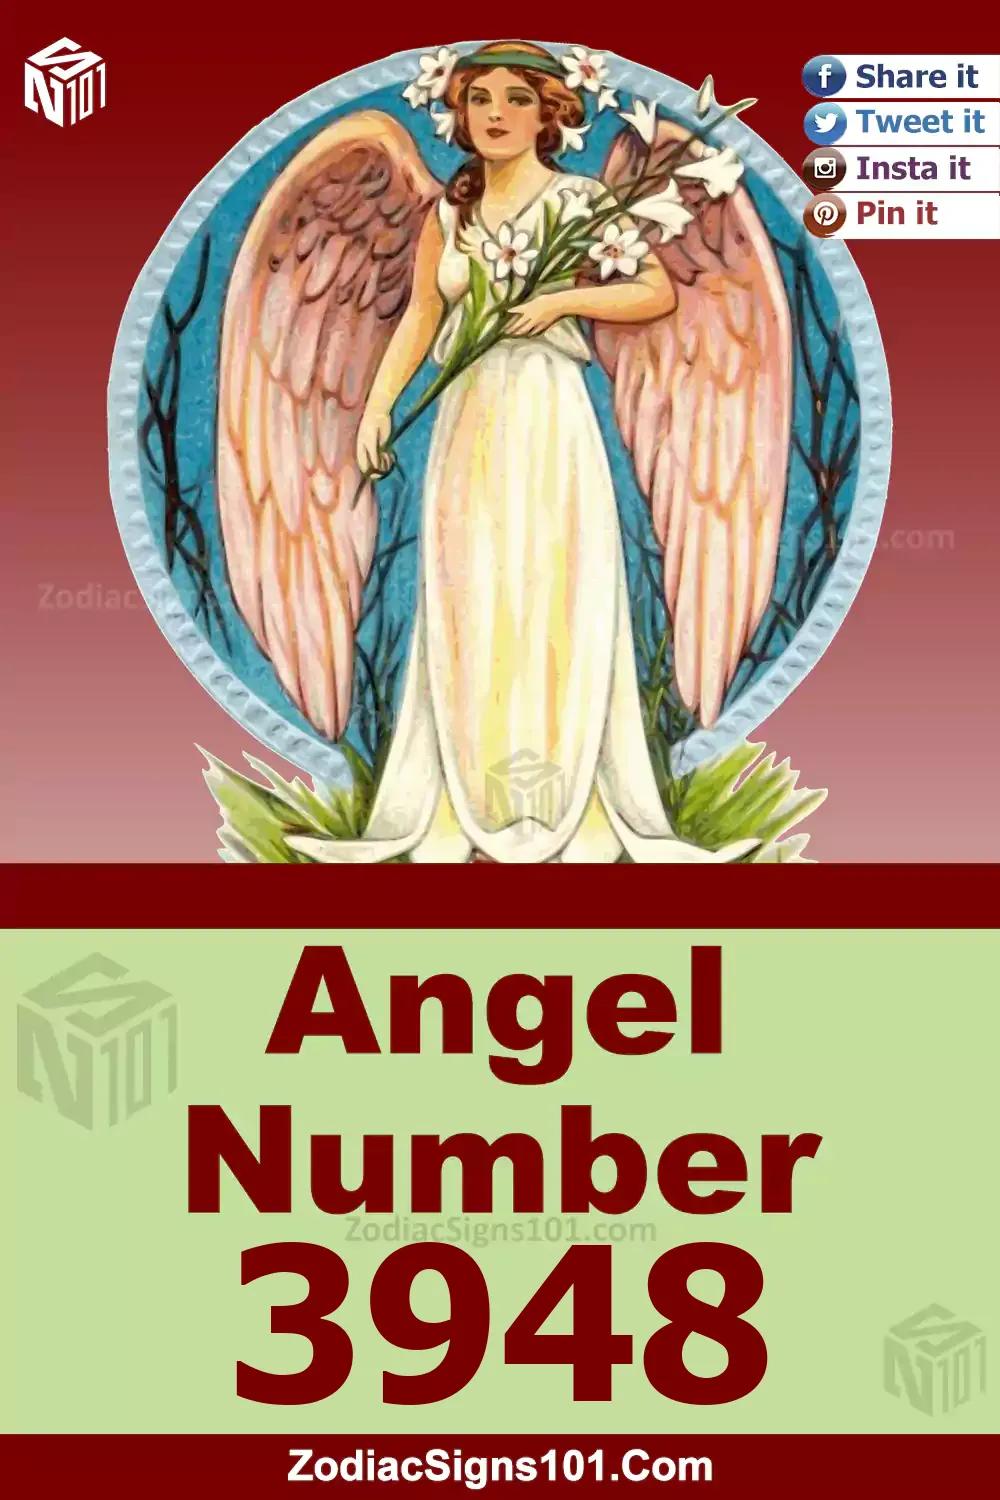 3948-Angel-Number-Meaning.jpg